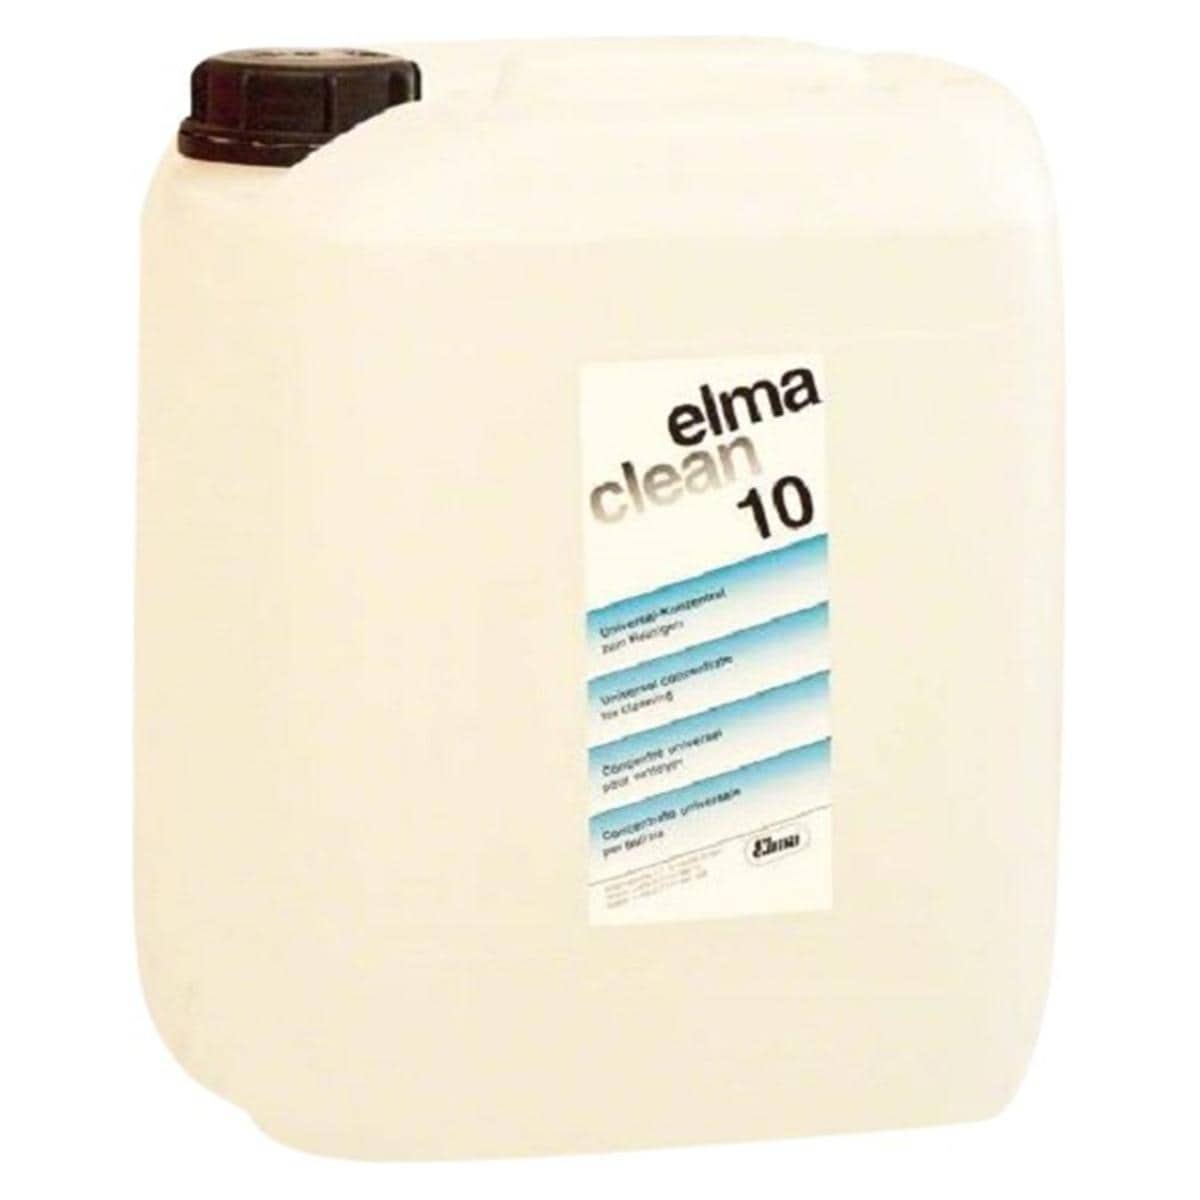 Elma clean 10 - Universal - Kanister 10 Liter